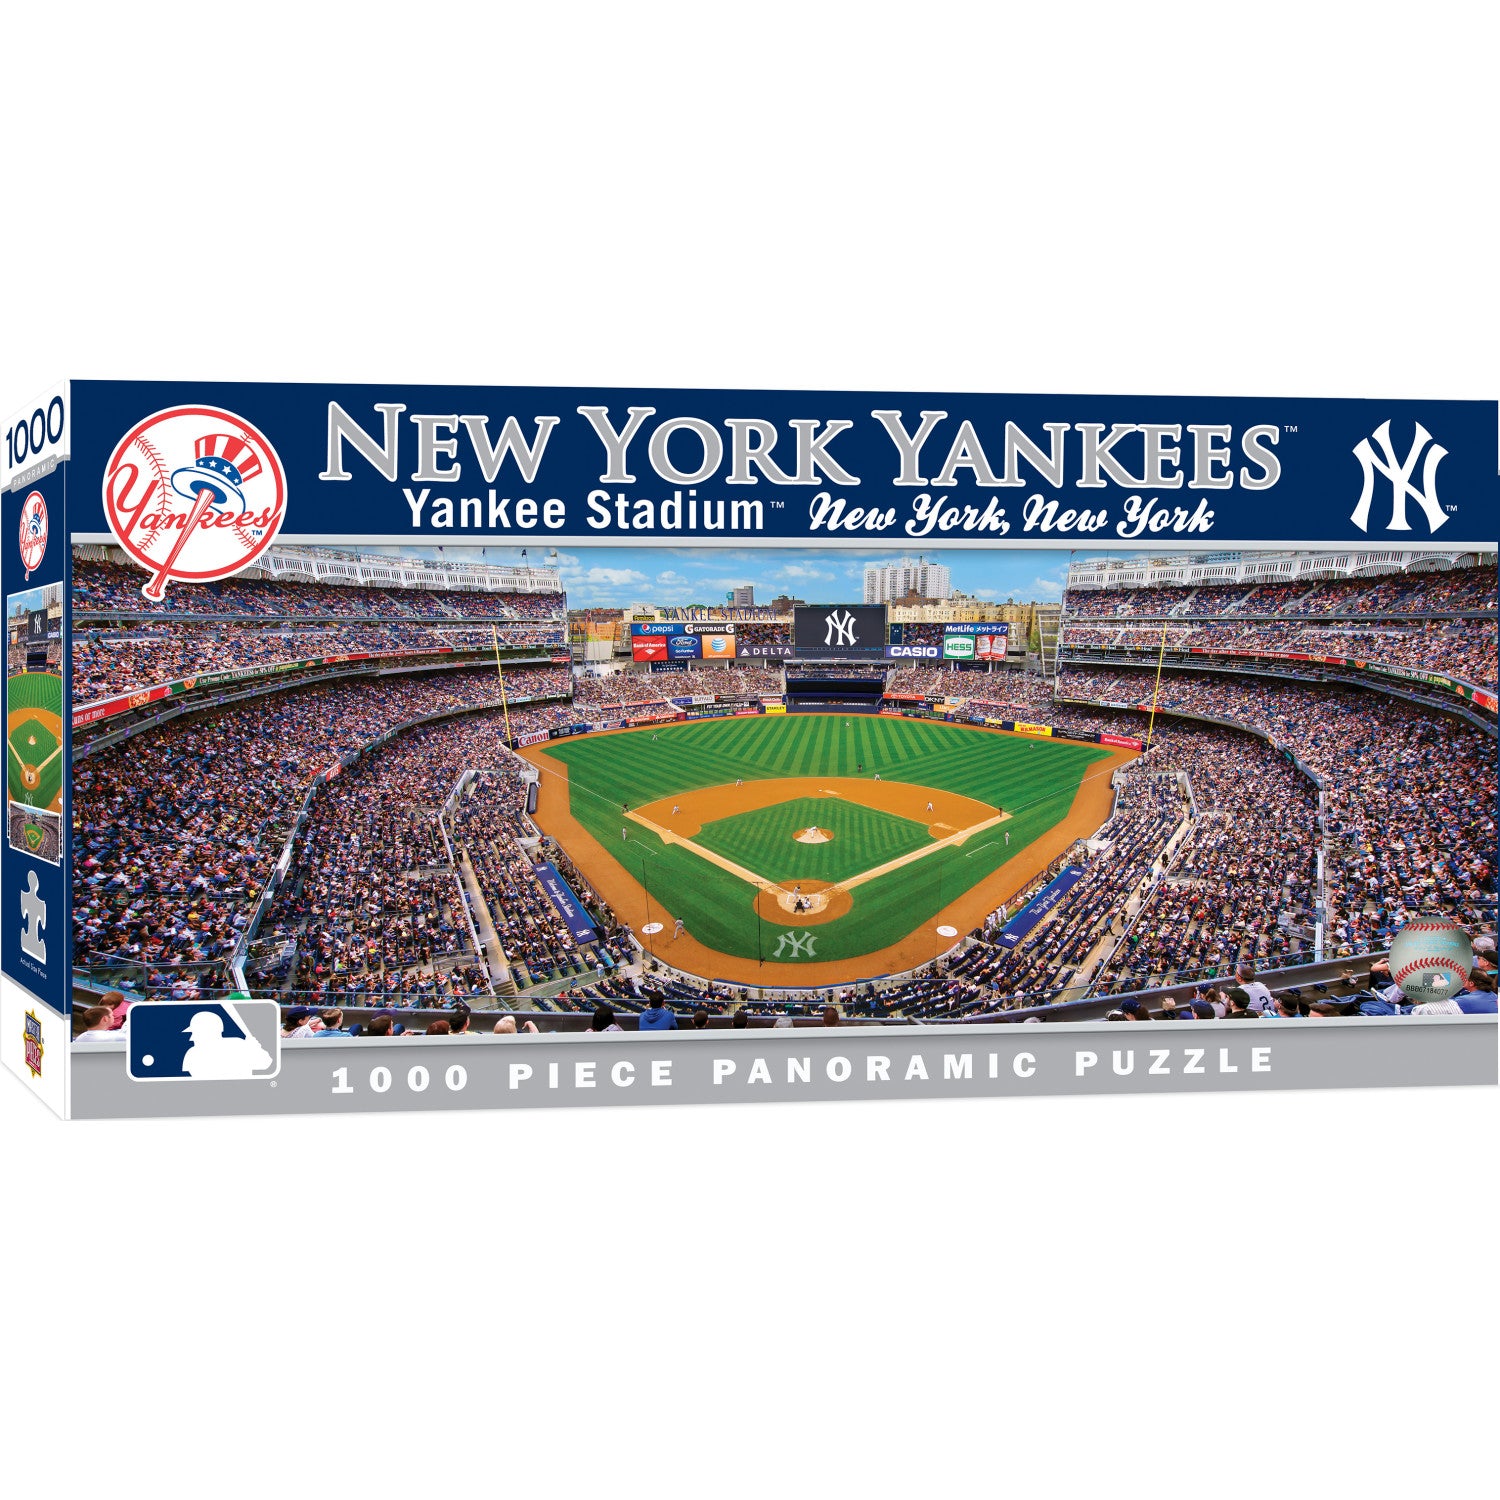 New York Yankees - 1000 Piece Panoramic Puzzle